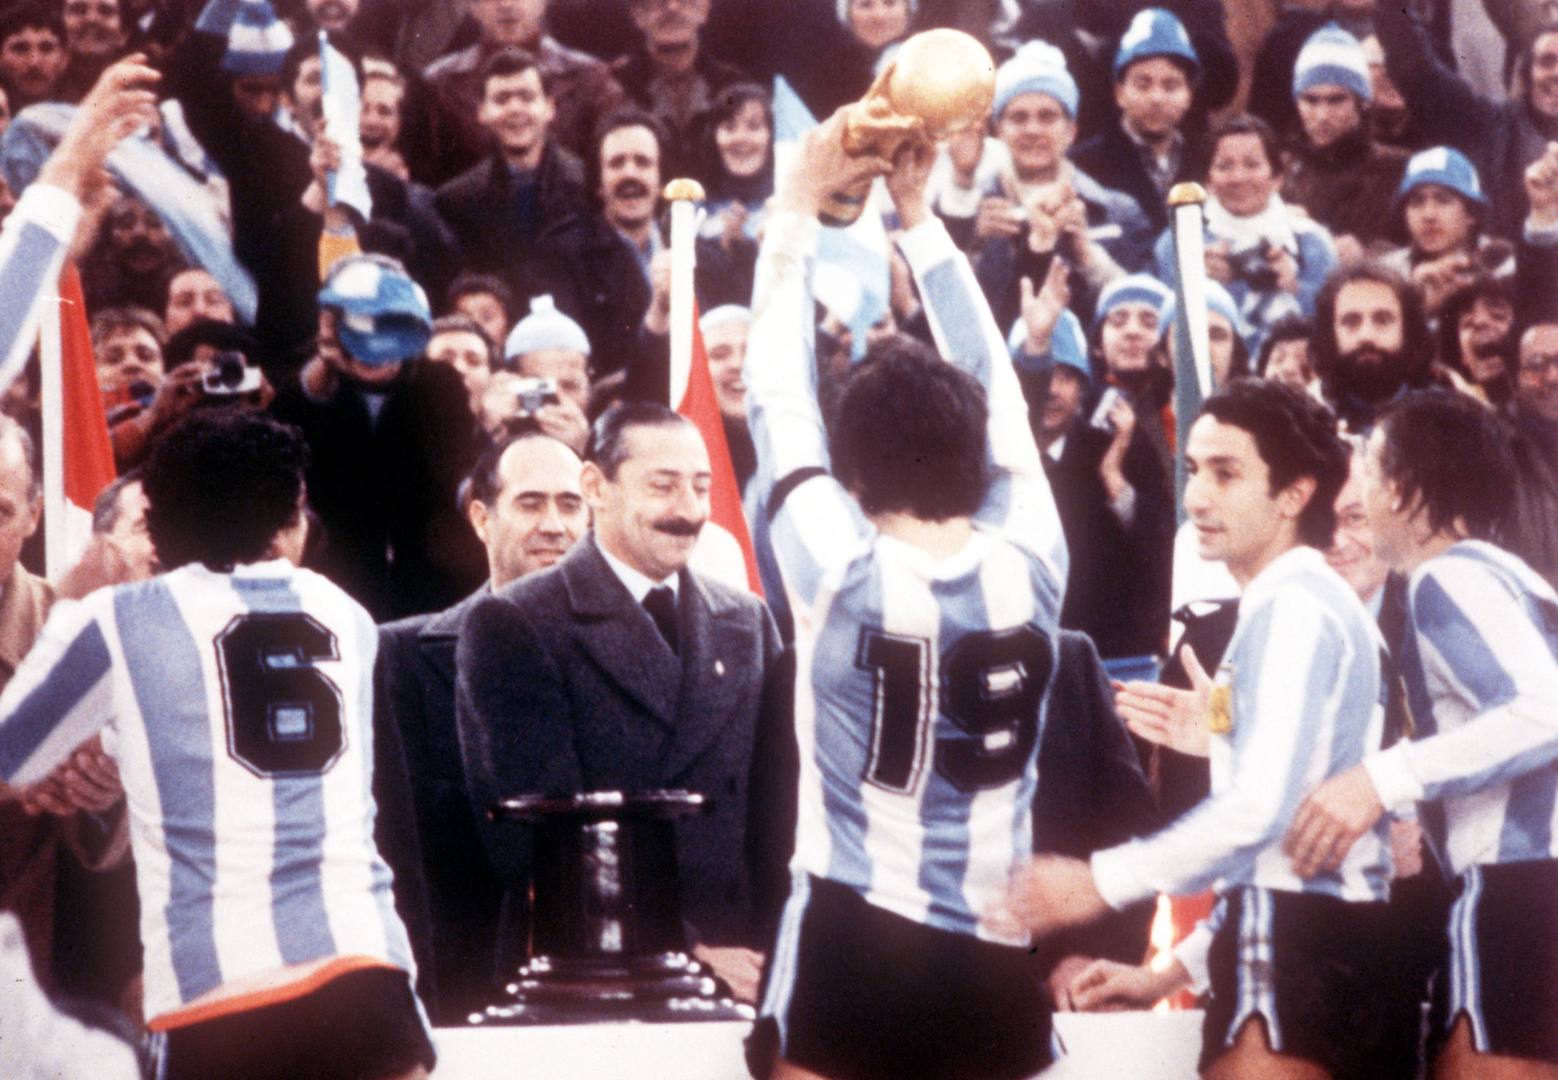 Afbeeldingsresultaat voor Campionato mondiale di calcio 1978 argentina campione